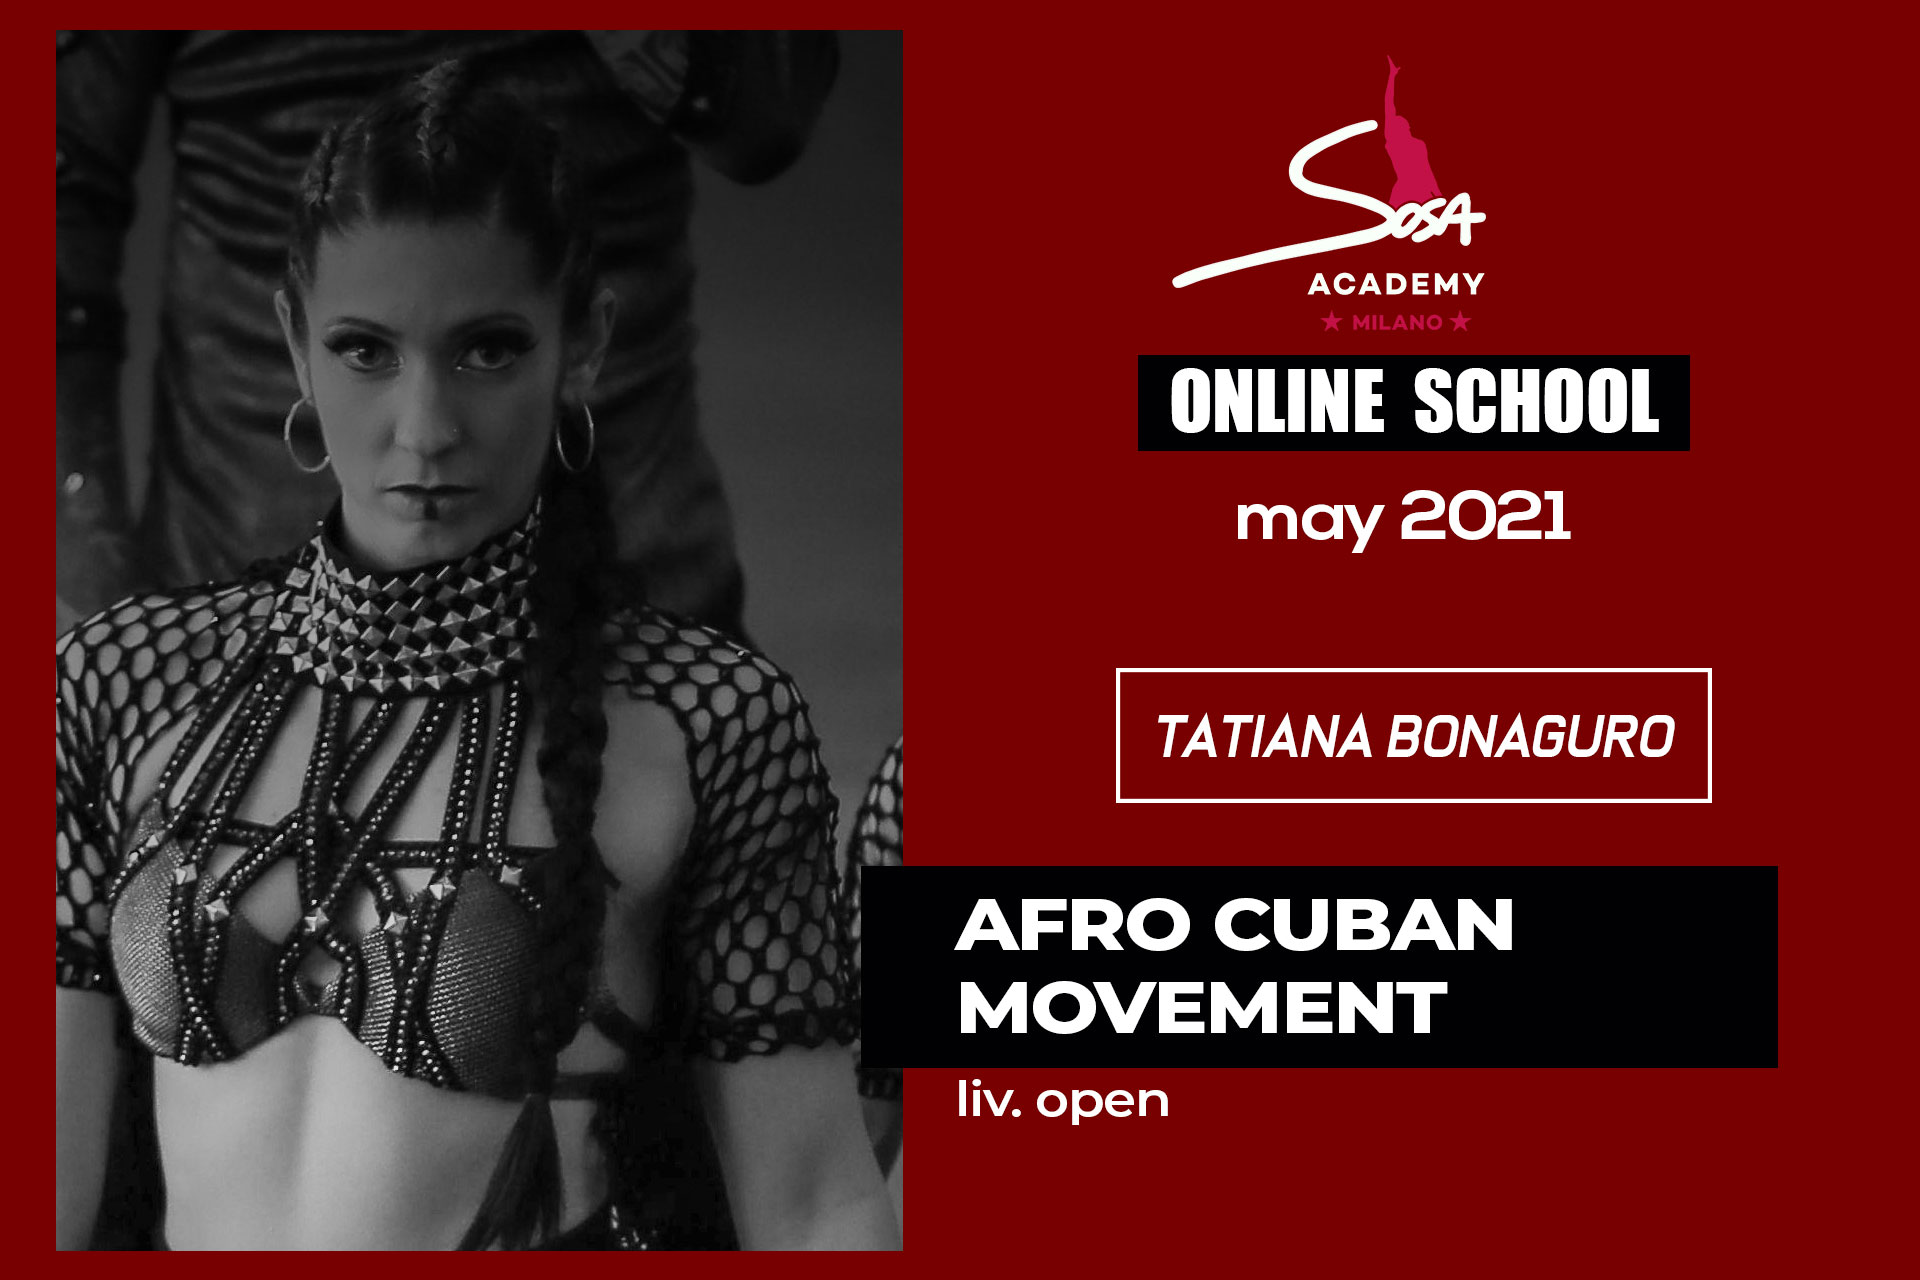 Afro Cuban Movement lev. Open